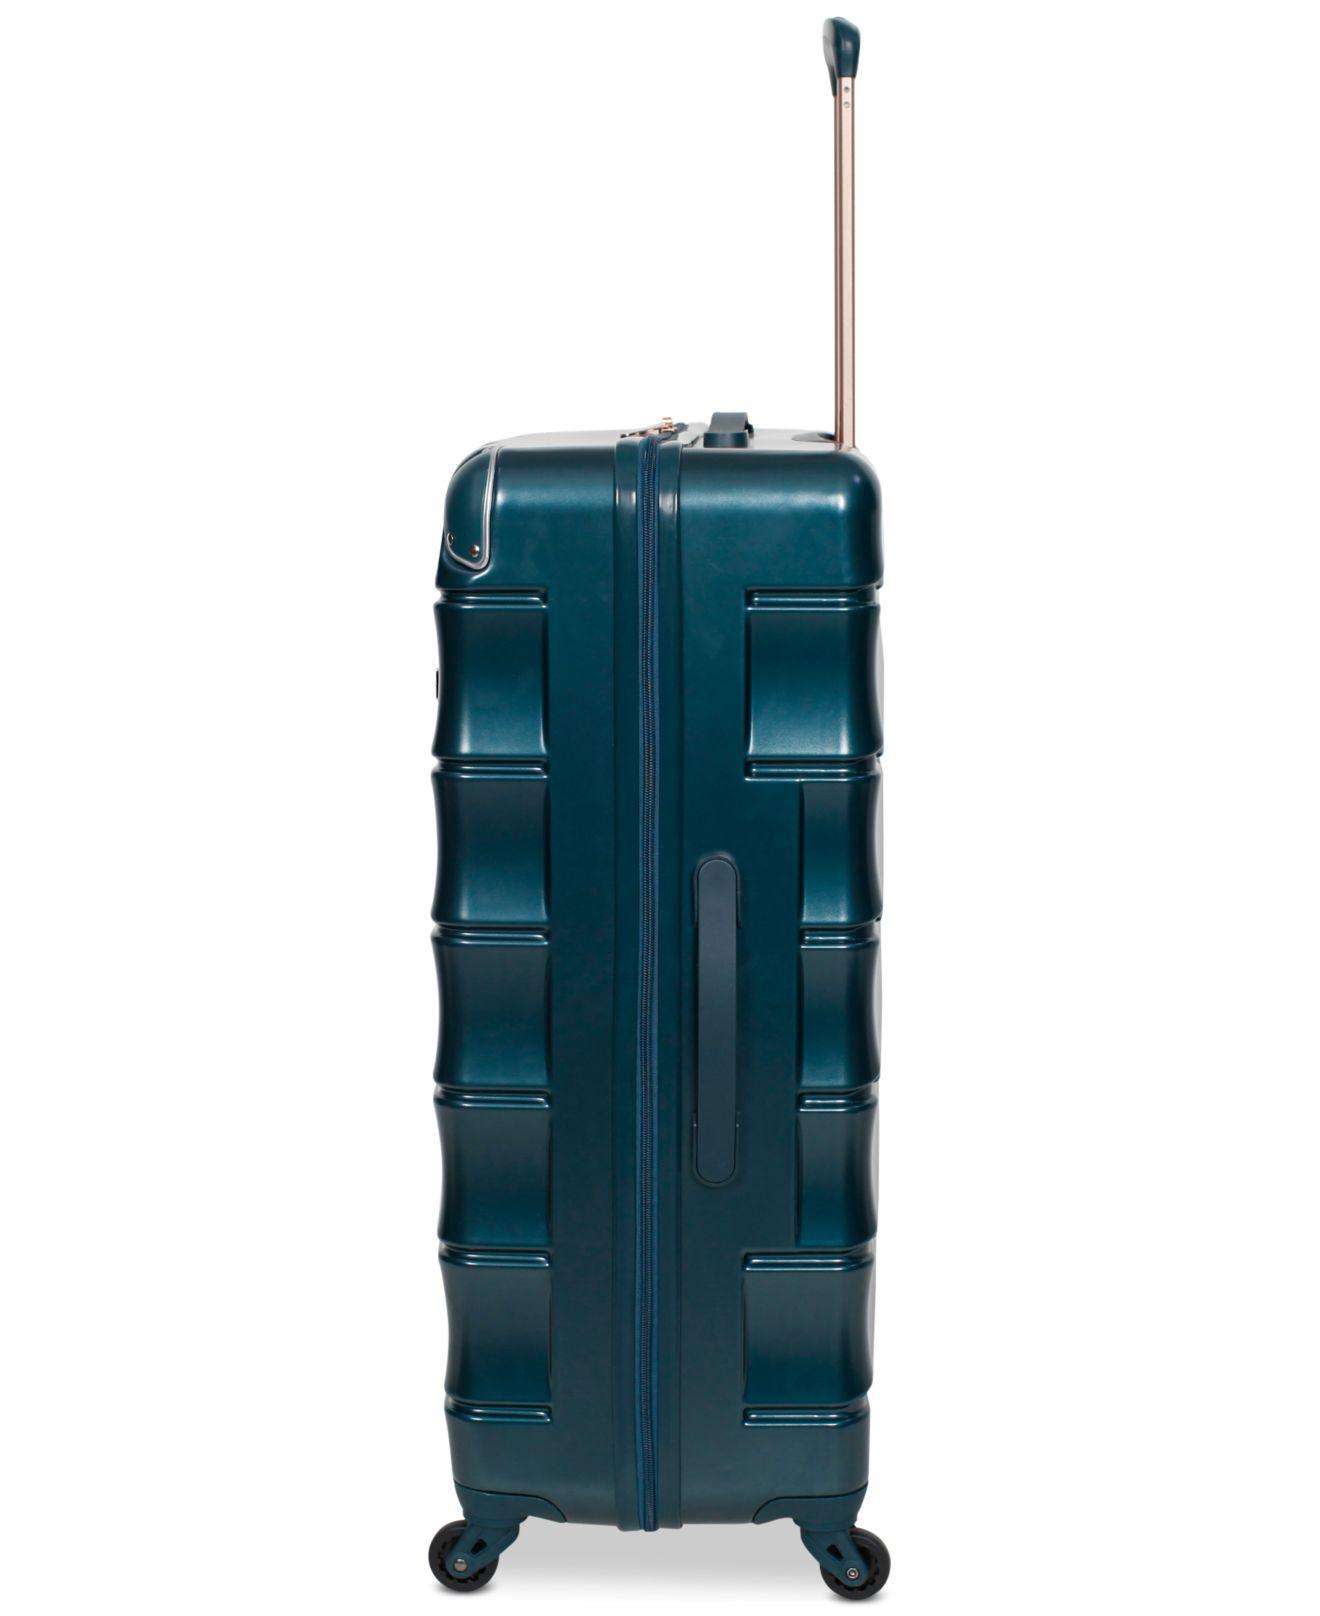 Jessica Simpson Vibrance 3 Piece Hardside Luggage Set - Blue Tint